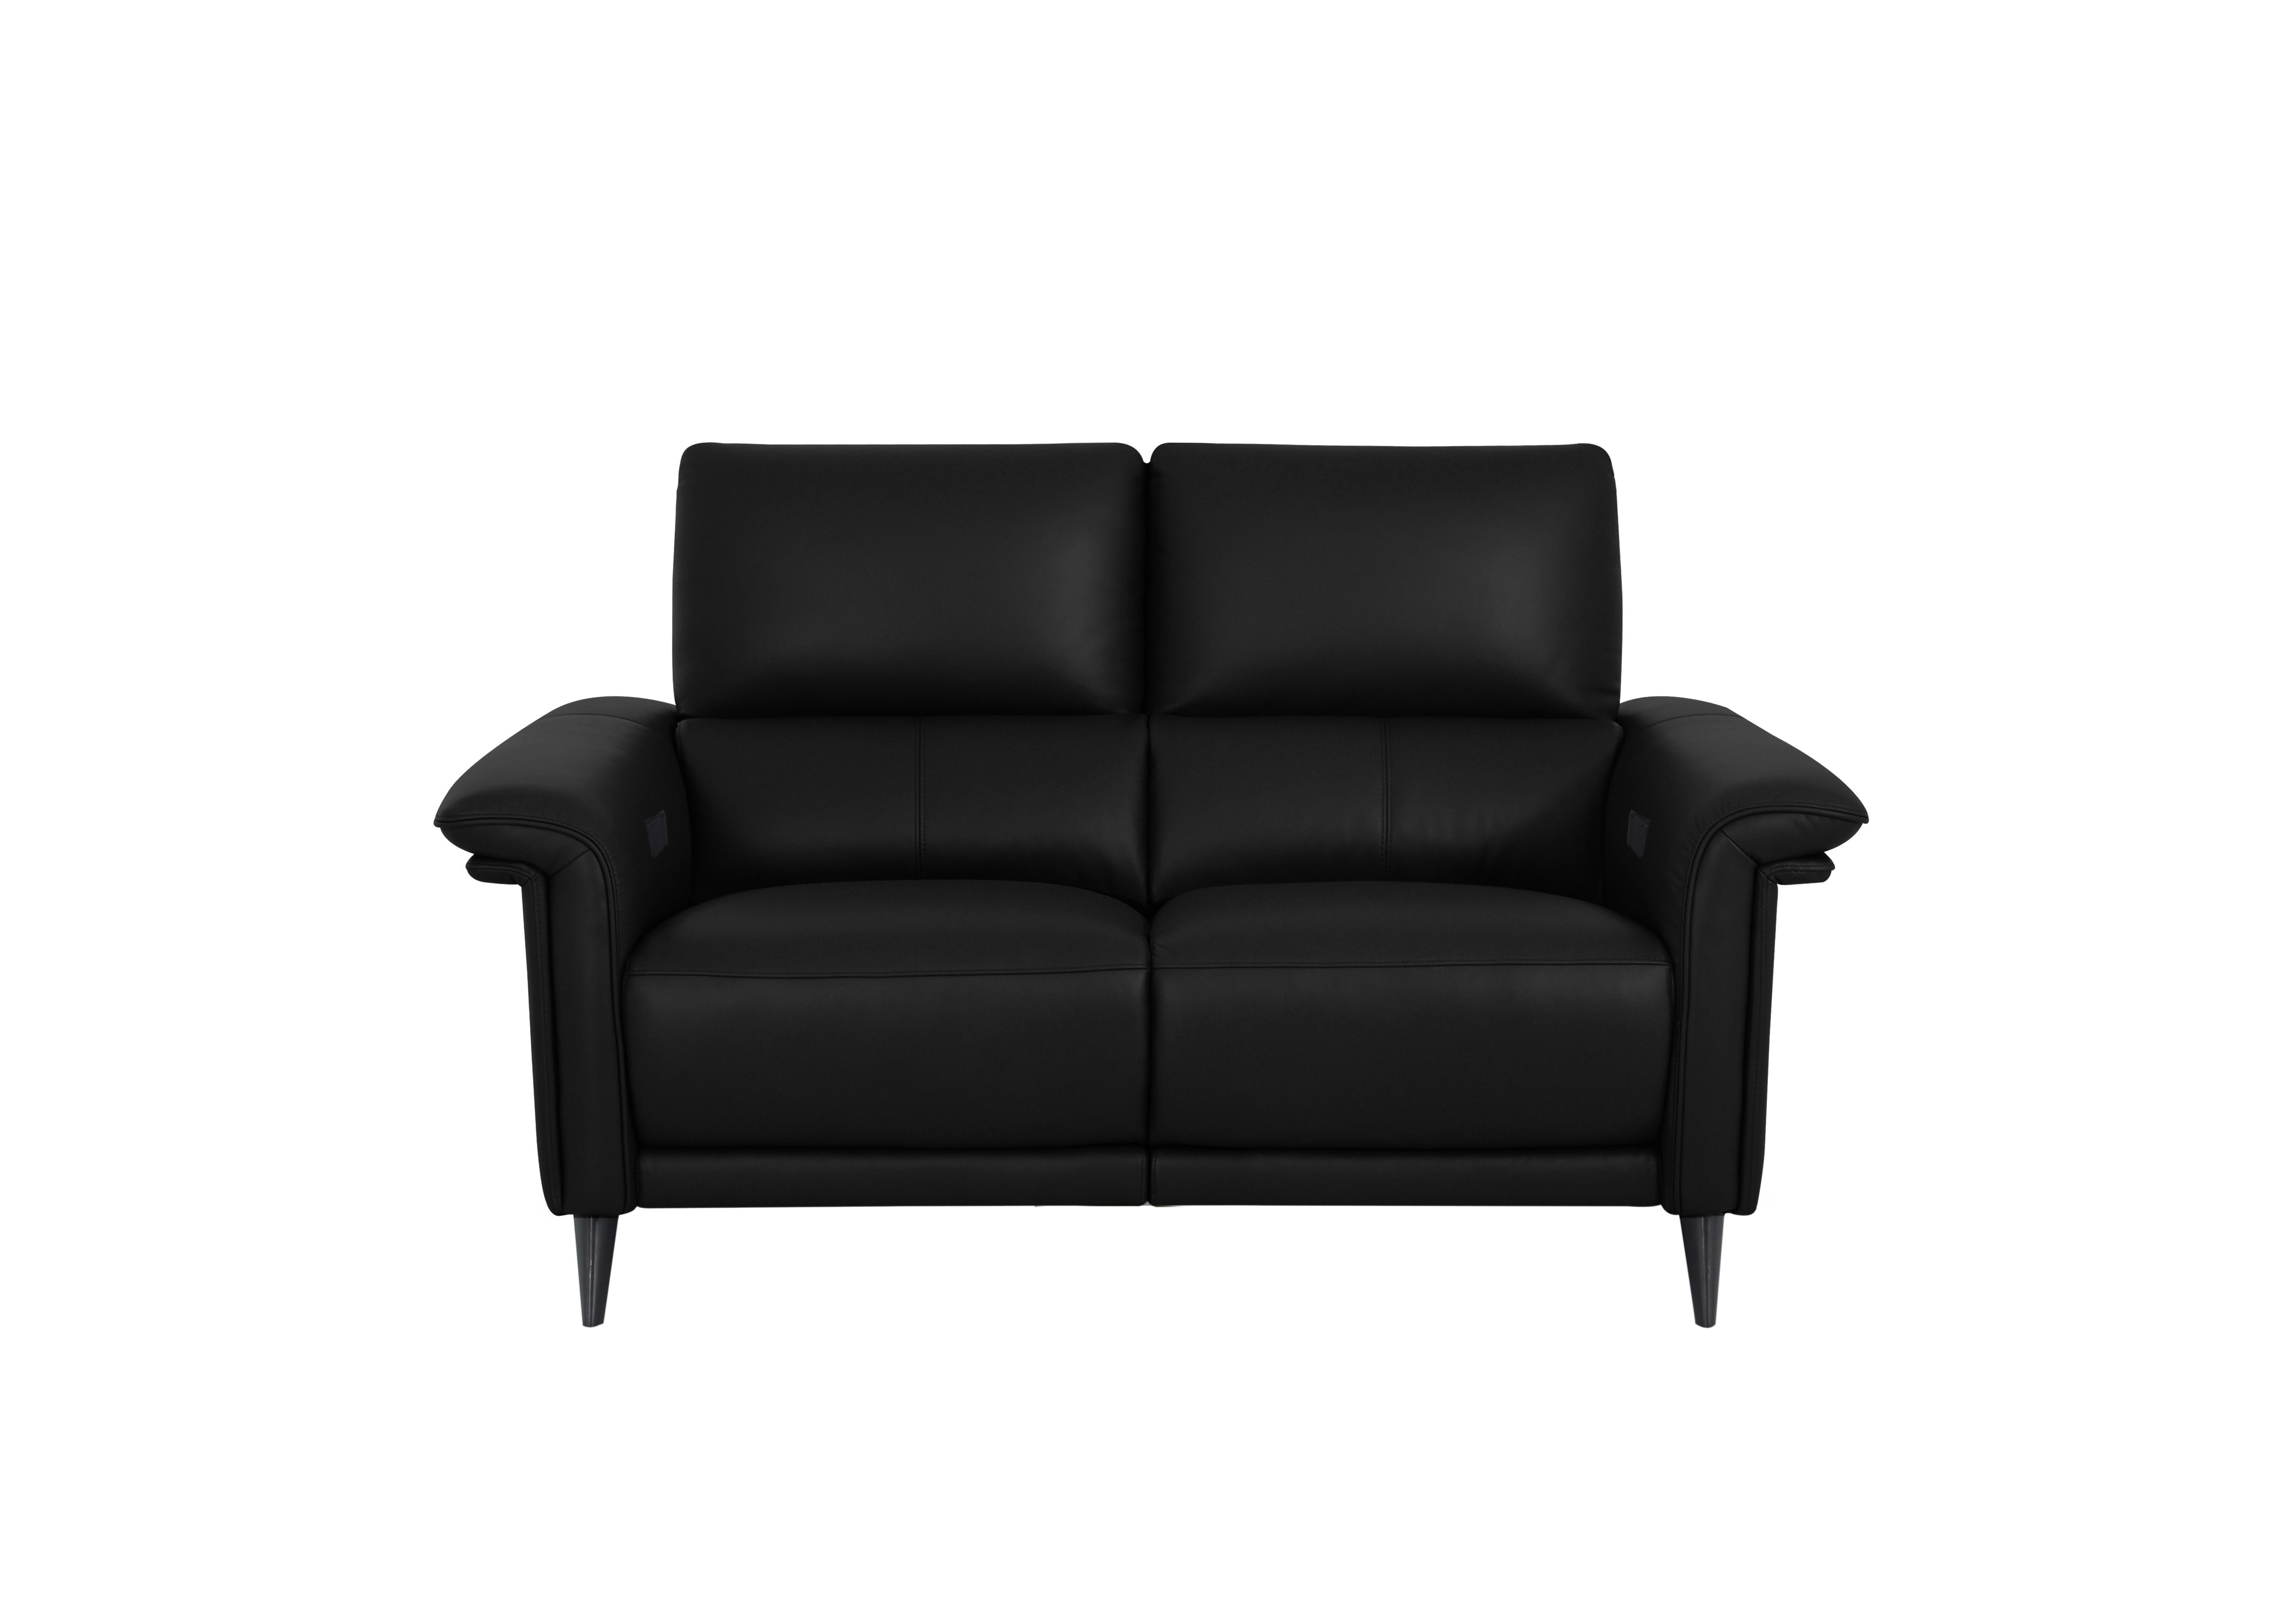 Huxley 2 Seater Leather Sofa in Nn-514e Black on Furniture Village